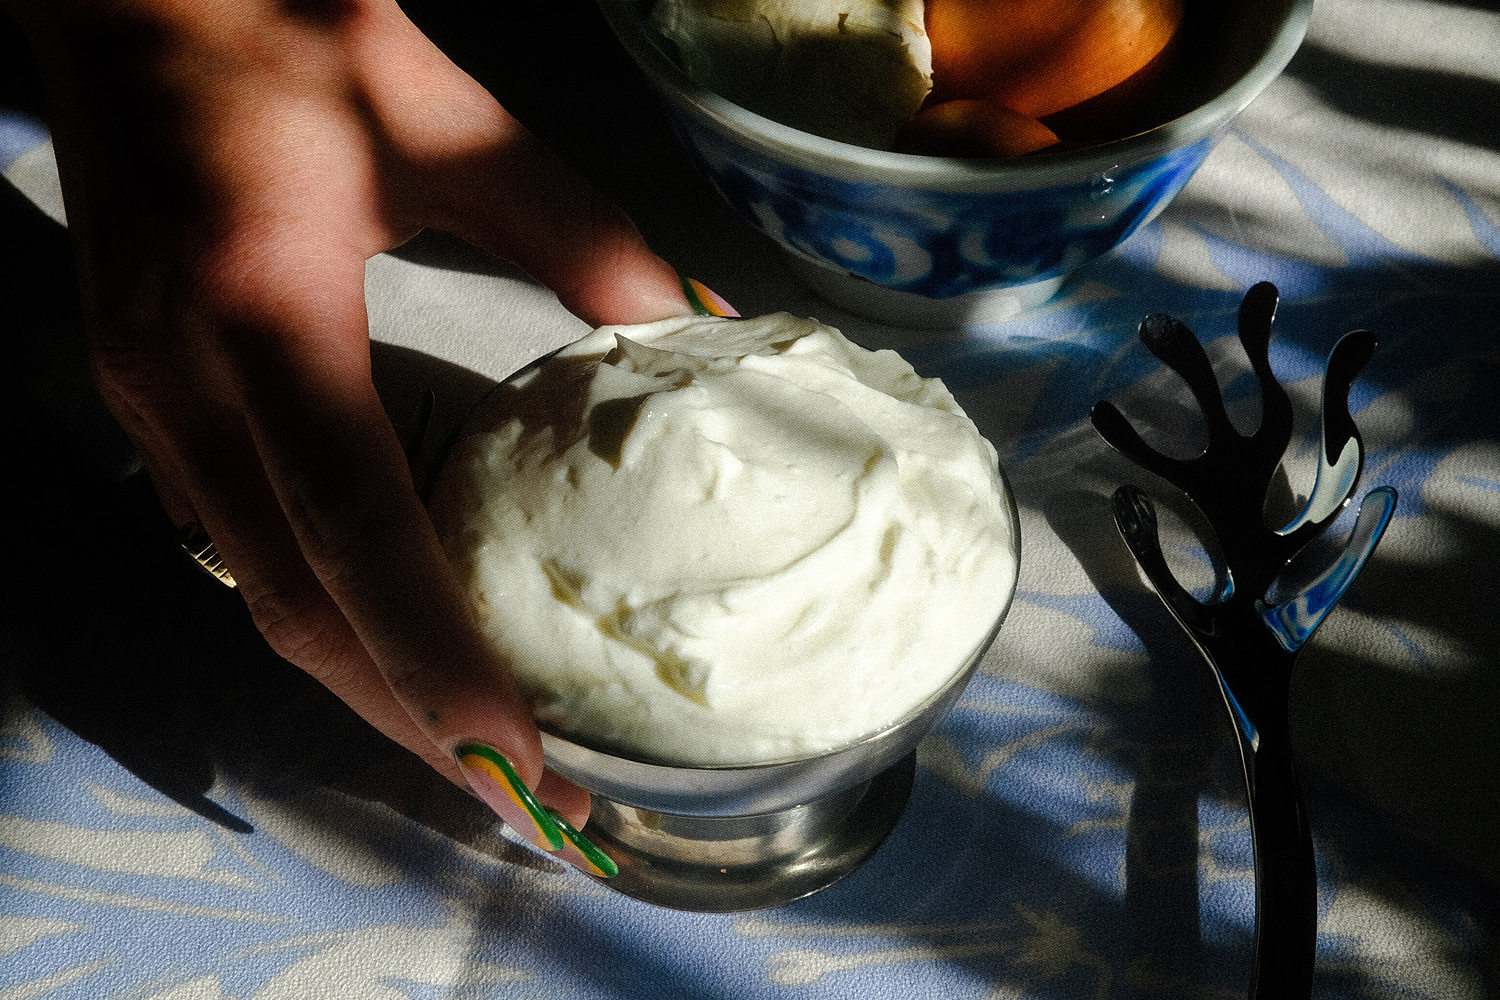 Does yogurt reduce risk of diabetes? The FDA says it might.